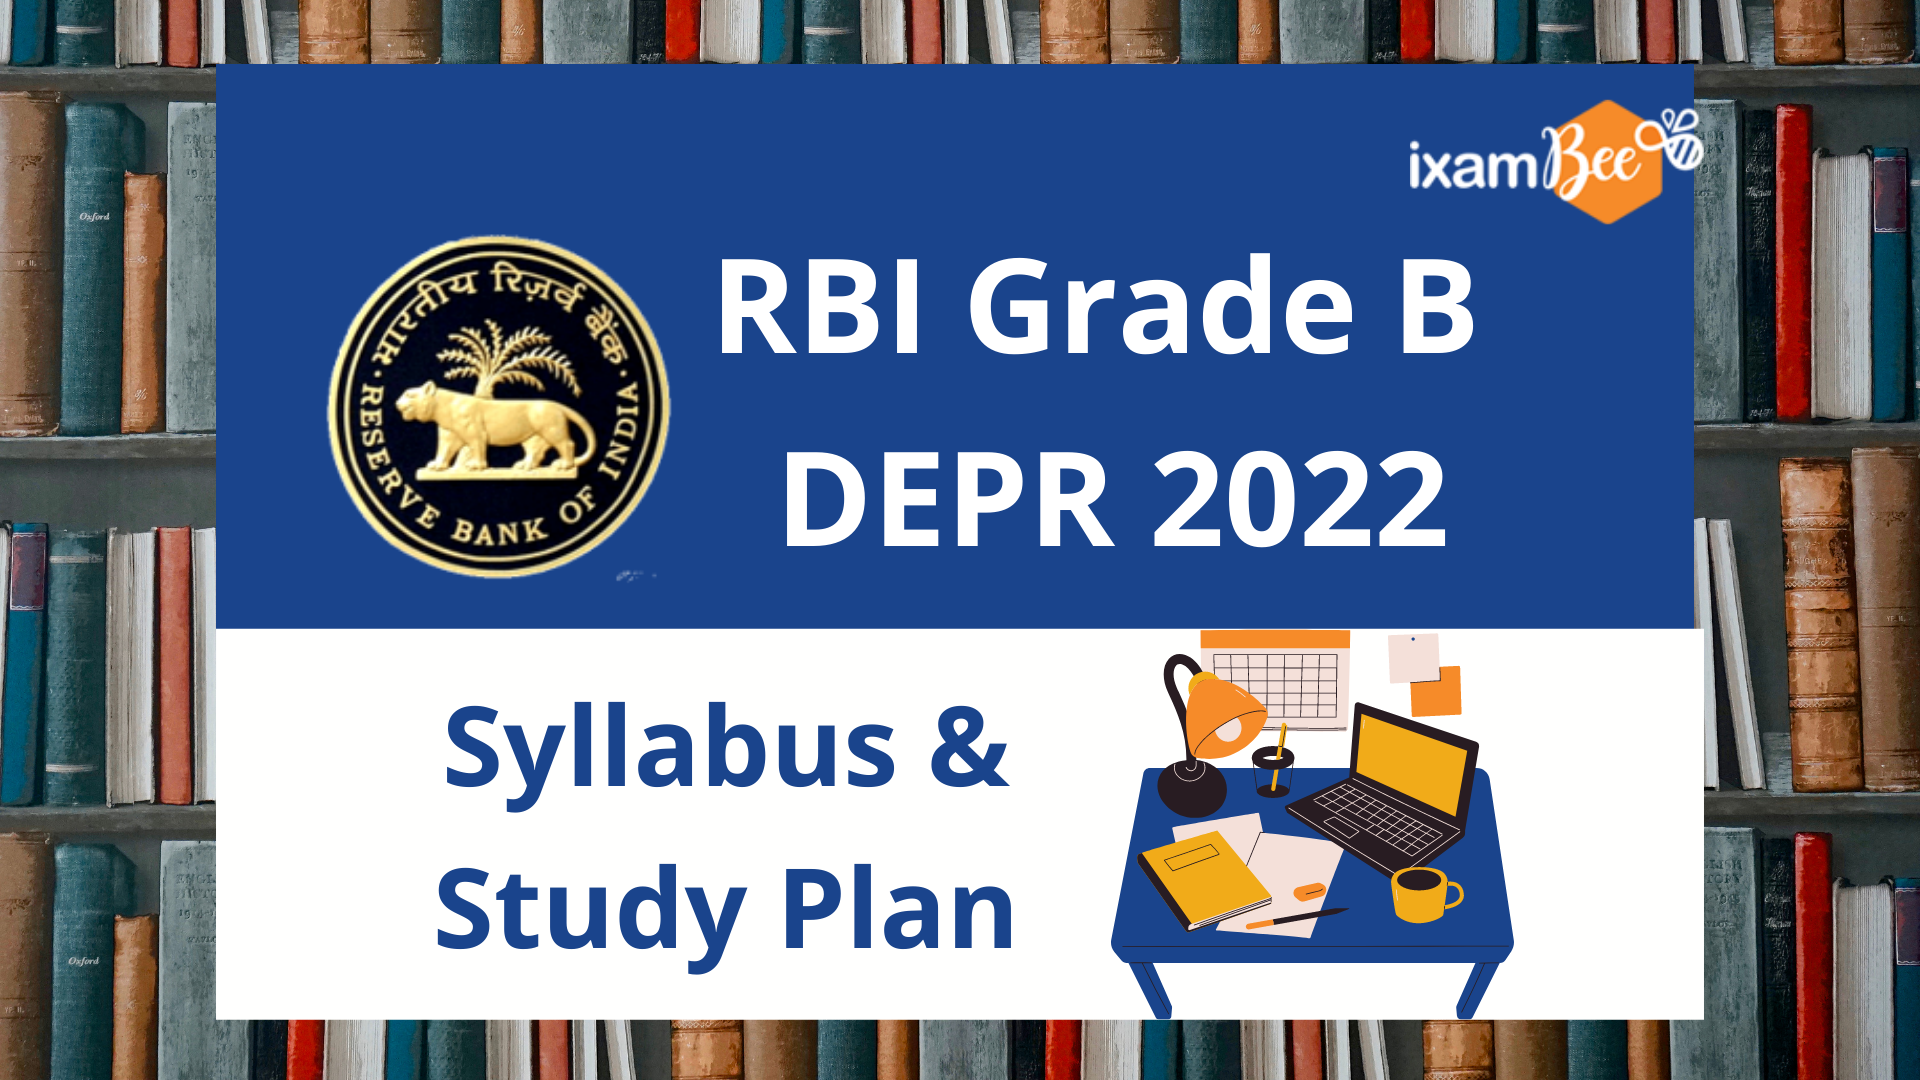 RBI Grade B DEPR 2022: Syllabus & Study Plan